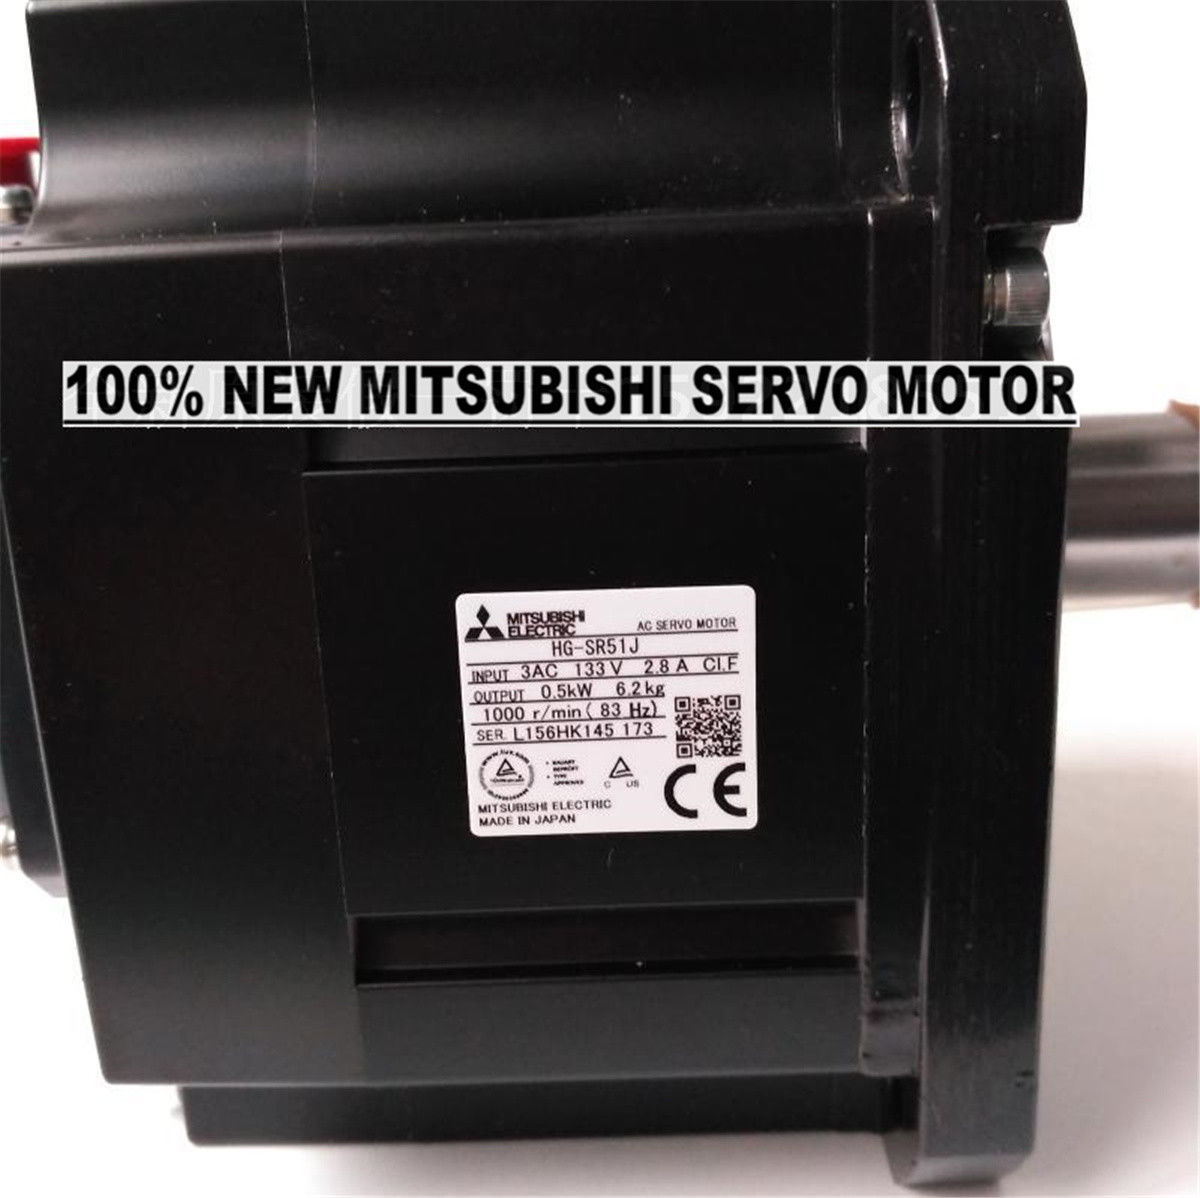 NEW Mitsubishi Servo Motor HG-SR51J in box HGSR51J - zum Schließen ins Bild klicken